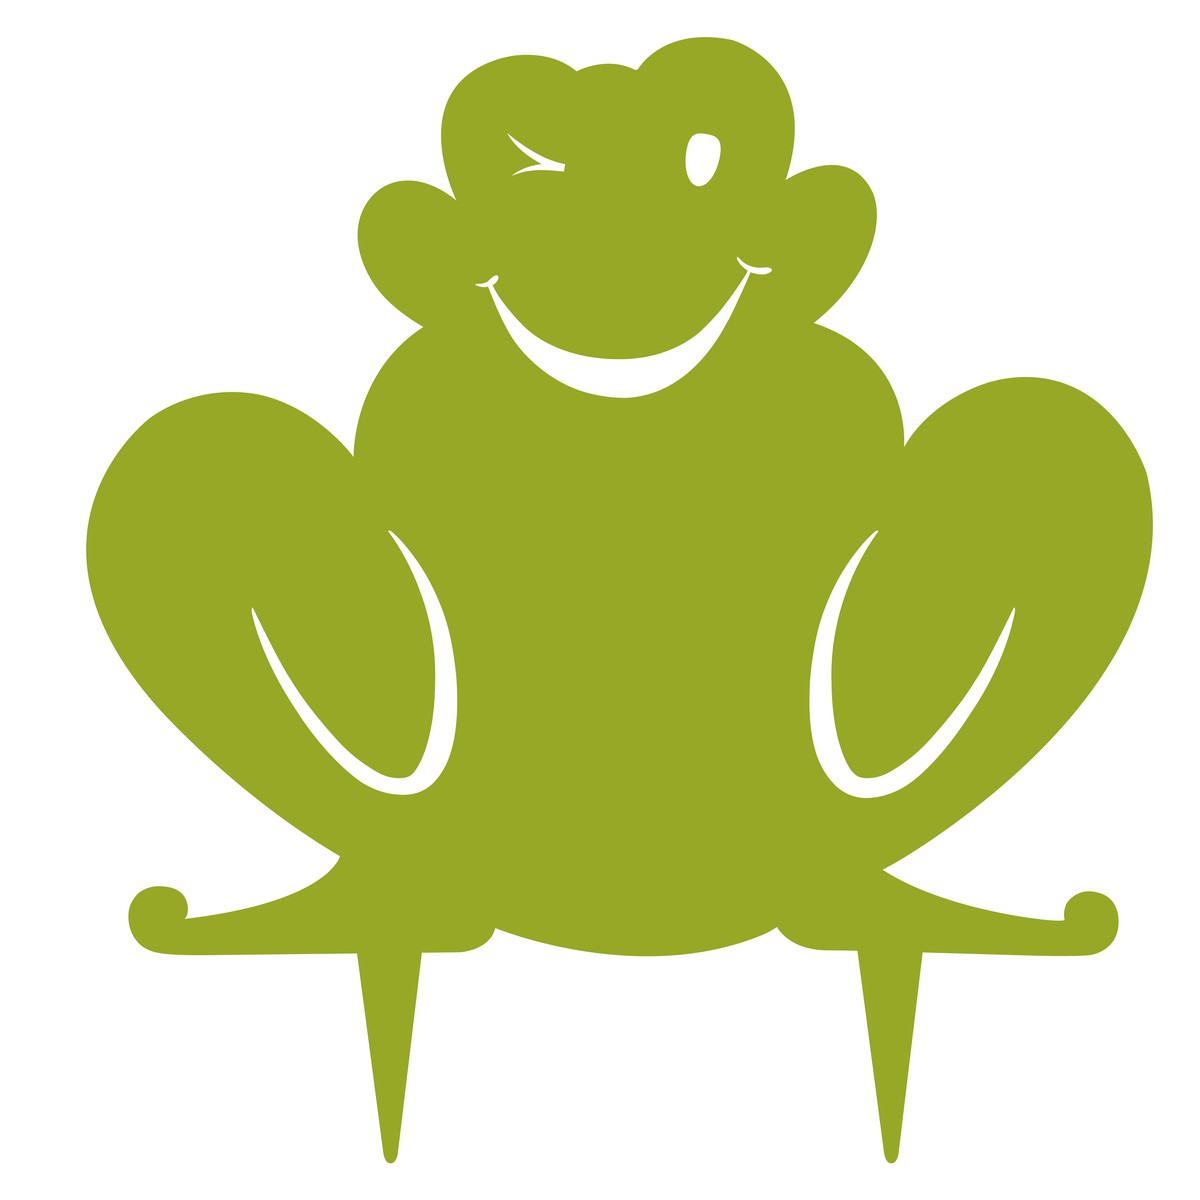   Figurine à piquer grenouille vert anis - Ht hors sol 34x40 cm Vert chartreuse 34x40cm